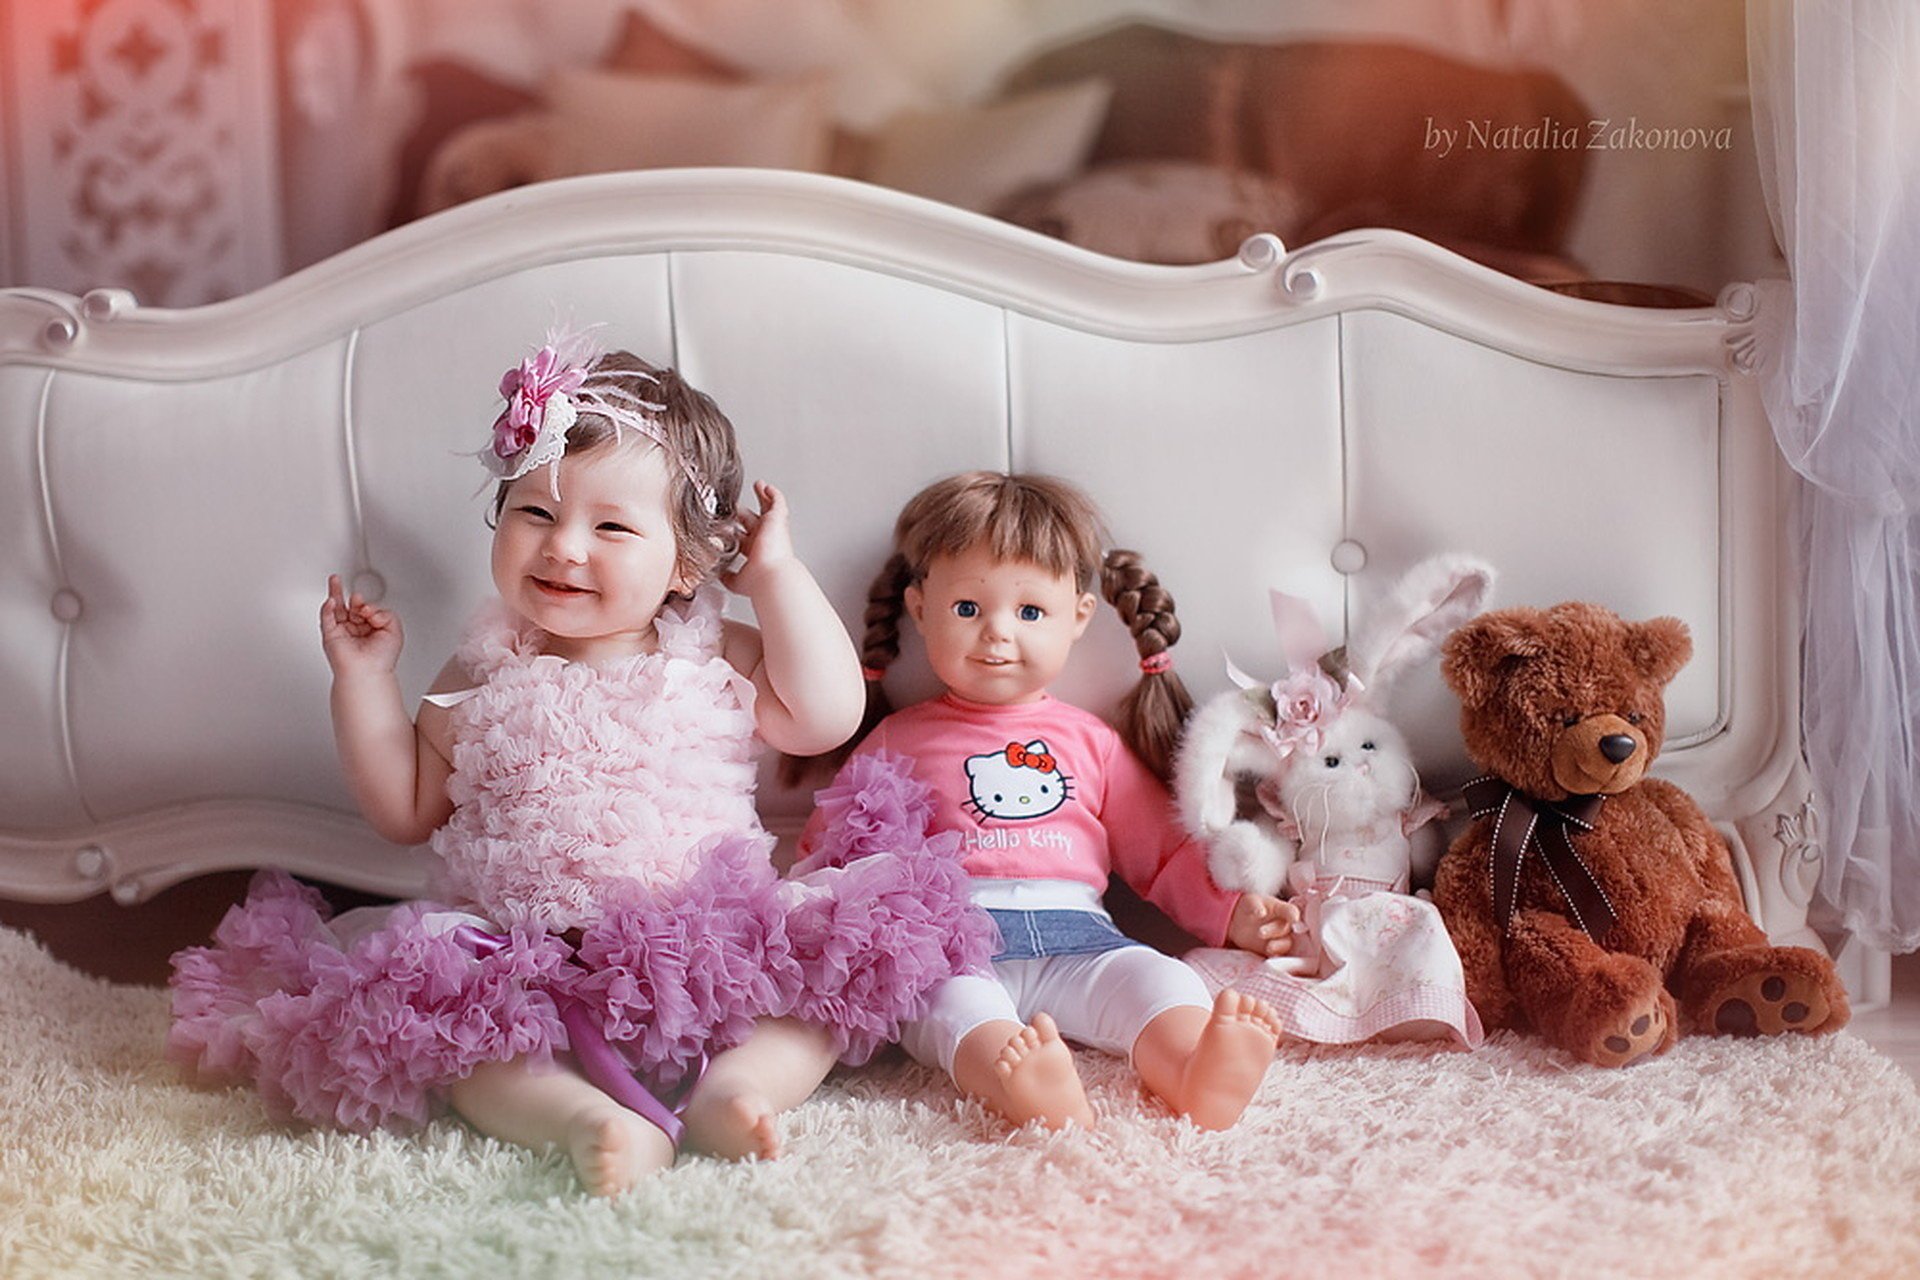 natalia zakonova photographer девочка позитив ребенок игрушки